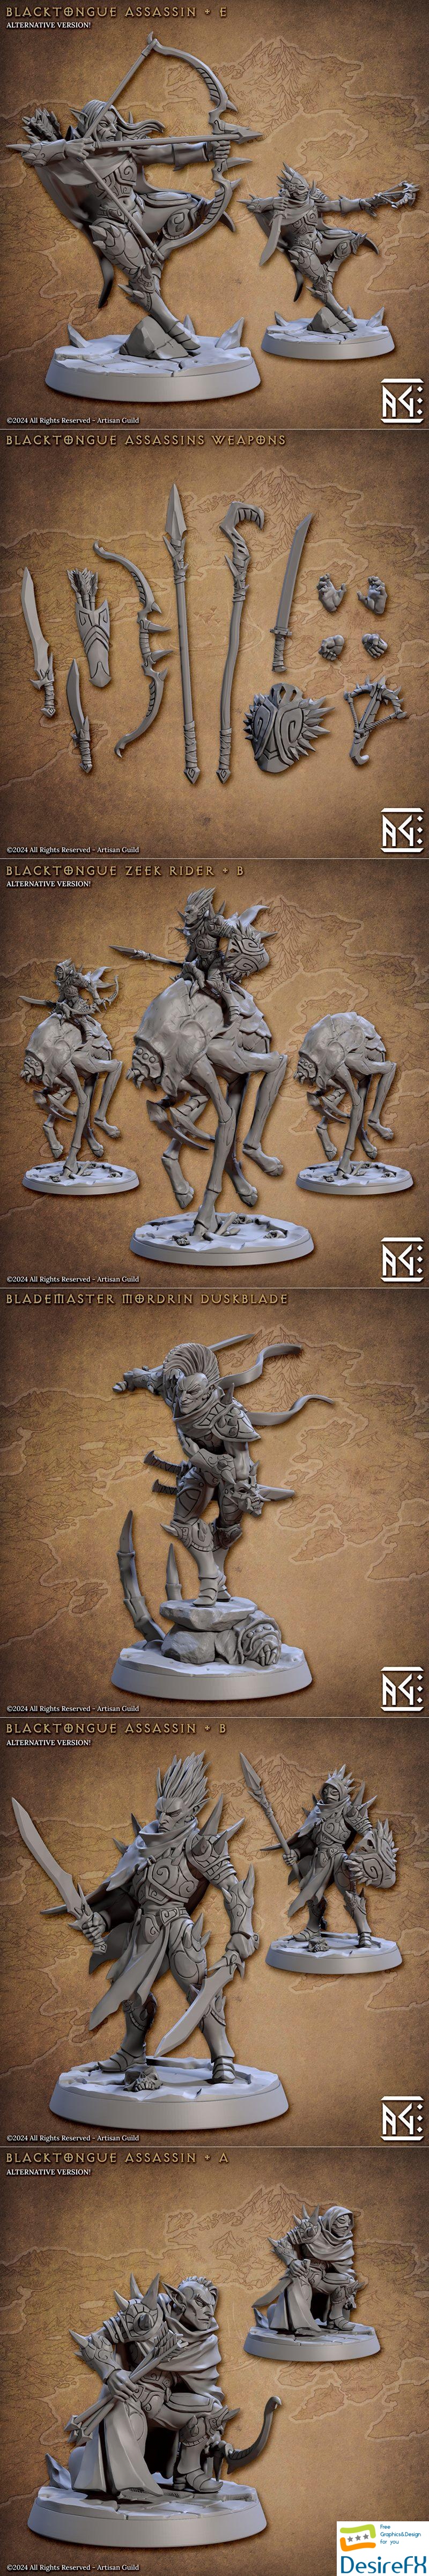 Artisan Guild - Blacktongue Assassins Complete Set - 57 3D Print